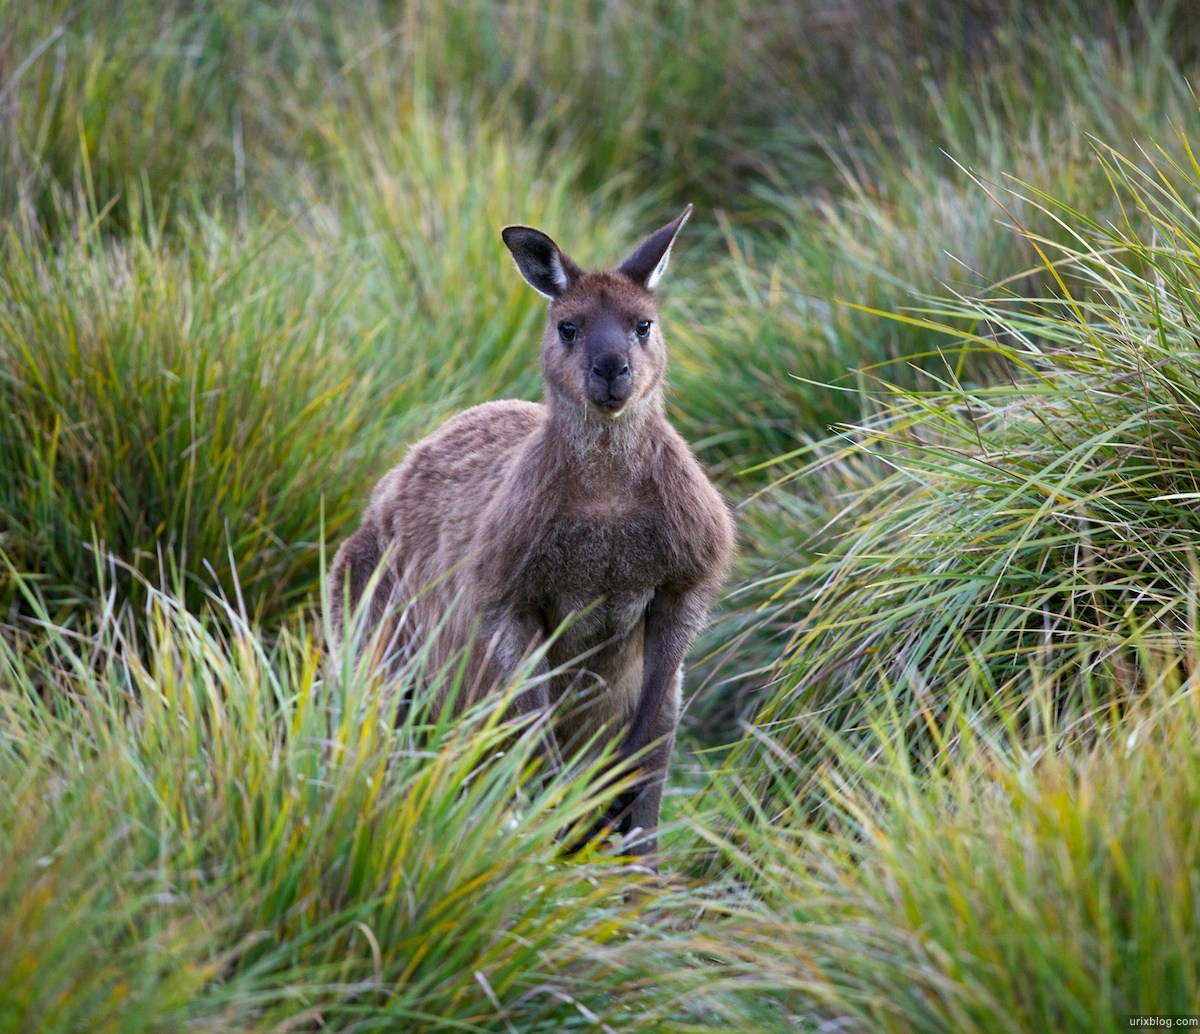 2011 2010 South Australia, Kangaroo Island, Остров Кенгуру, Южная Австралия, Flinders Chase, kangaroo, кенгуру